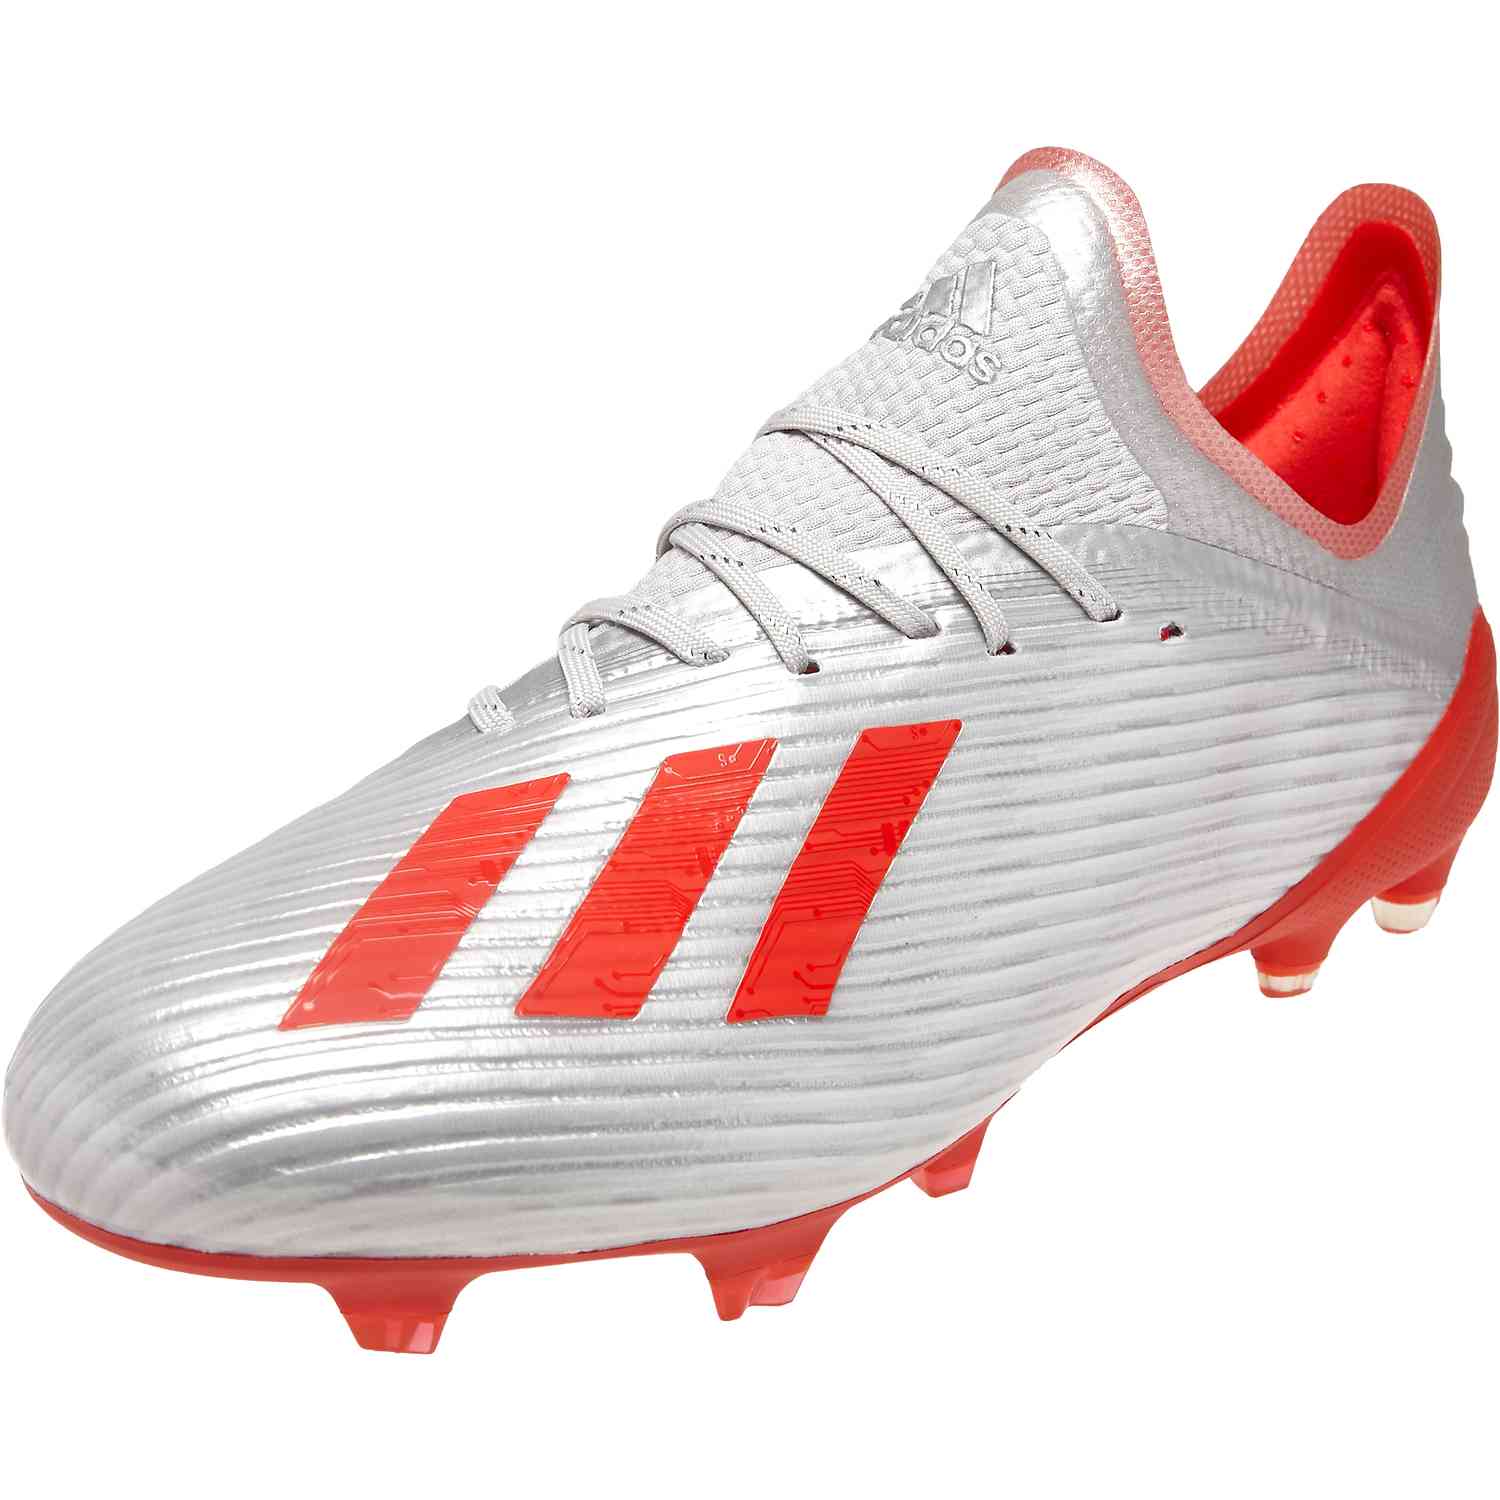 Adidas X 19 1 Fg 302 Redirect Soccer Master